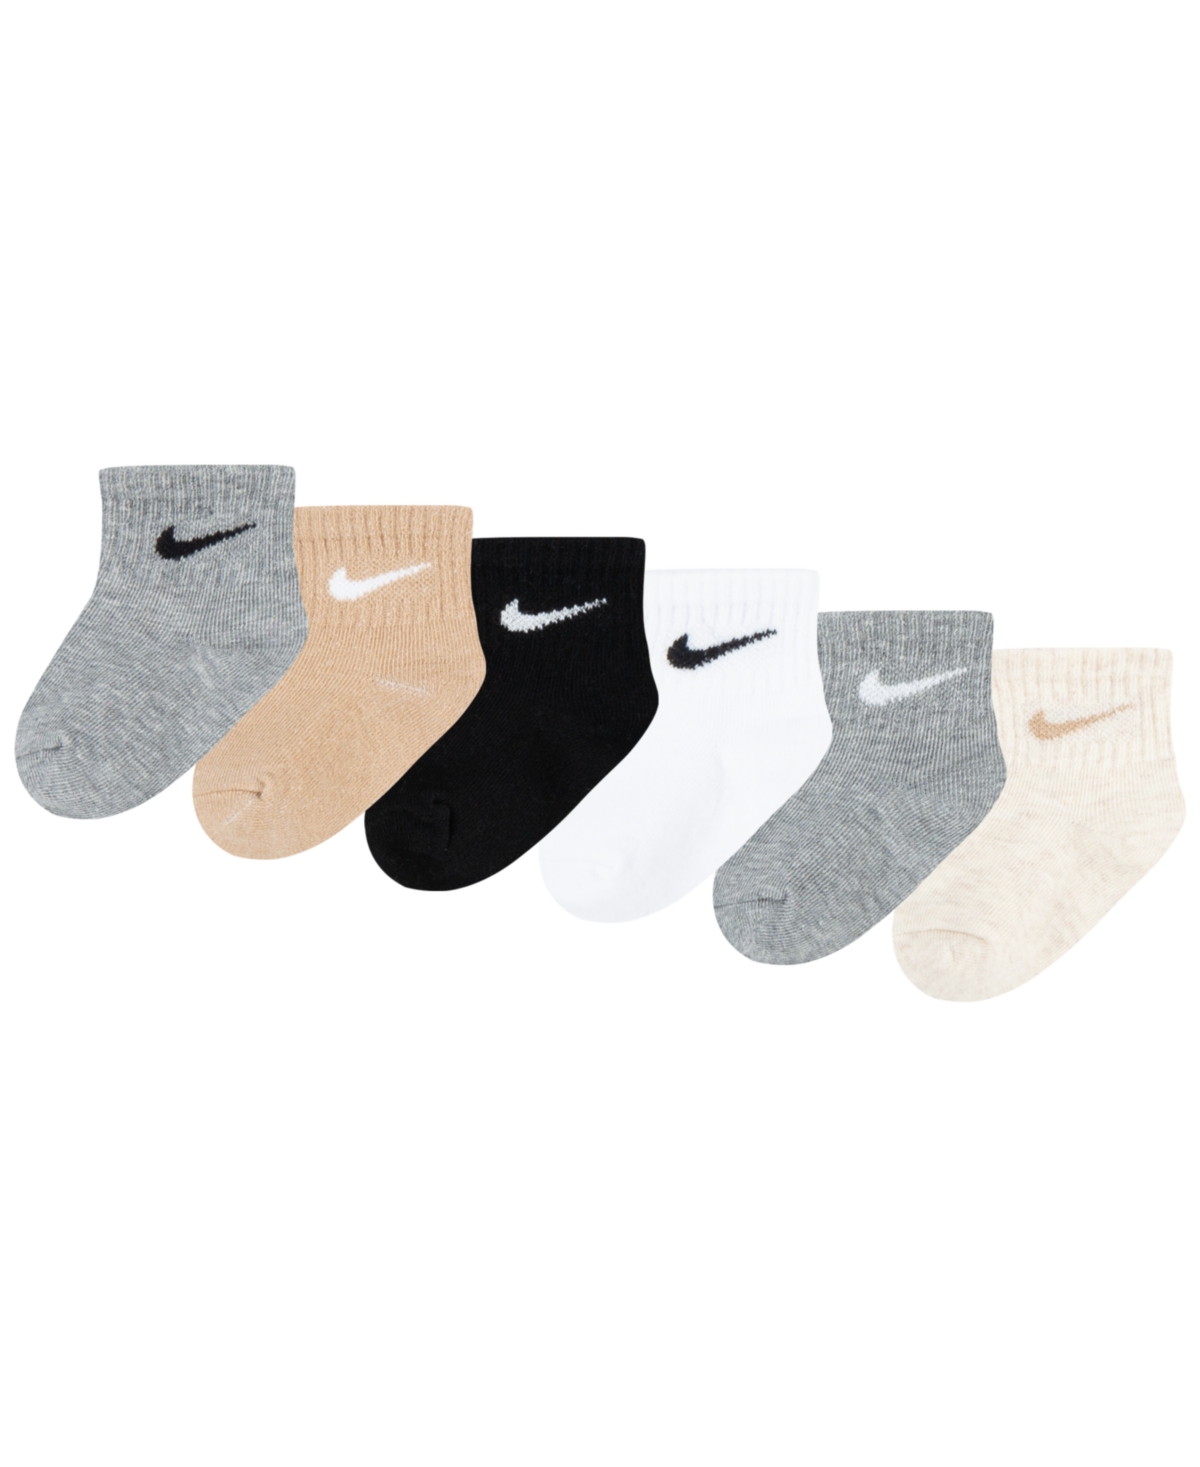 Nike Baby Boys Or Baby Girls Assorted Ankle Socks, Pack Of 6 In Dark Gray Heather,black